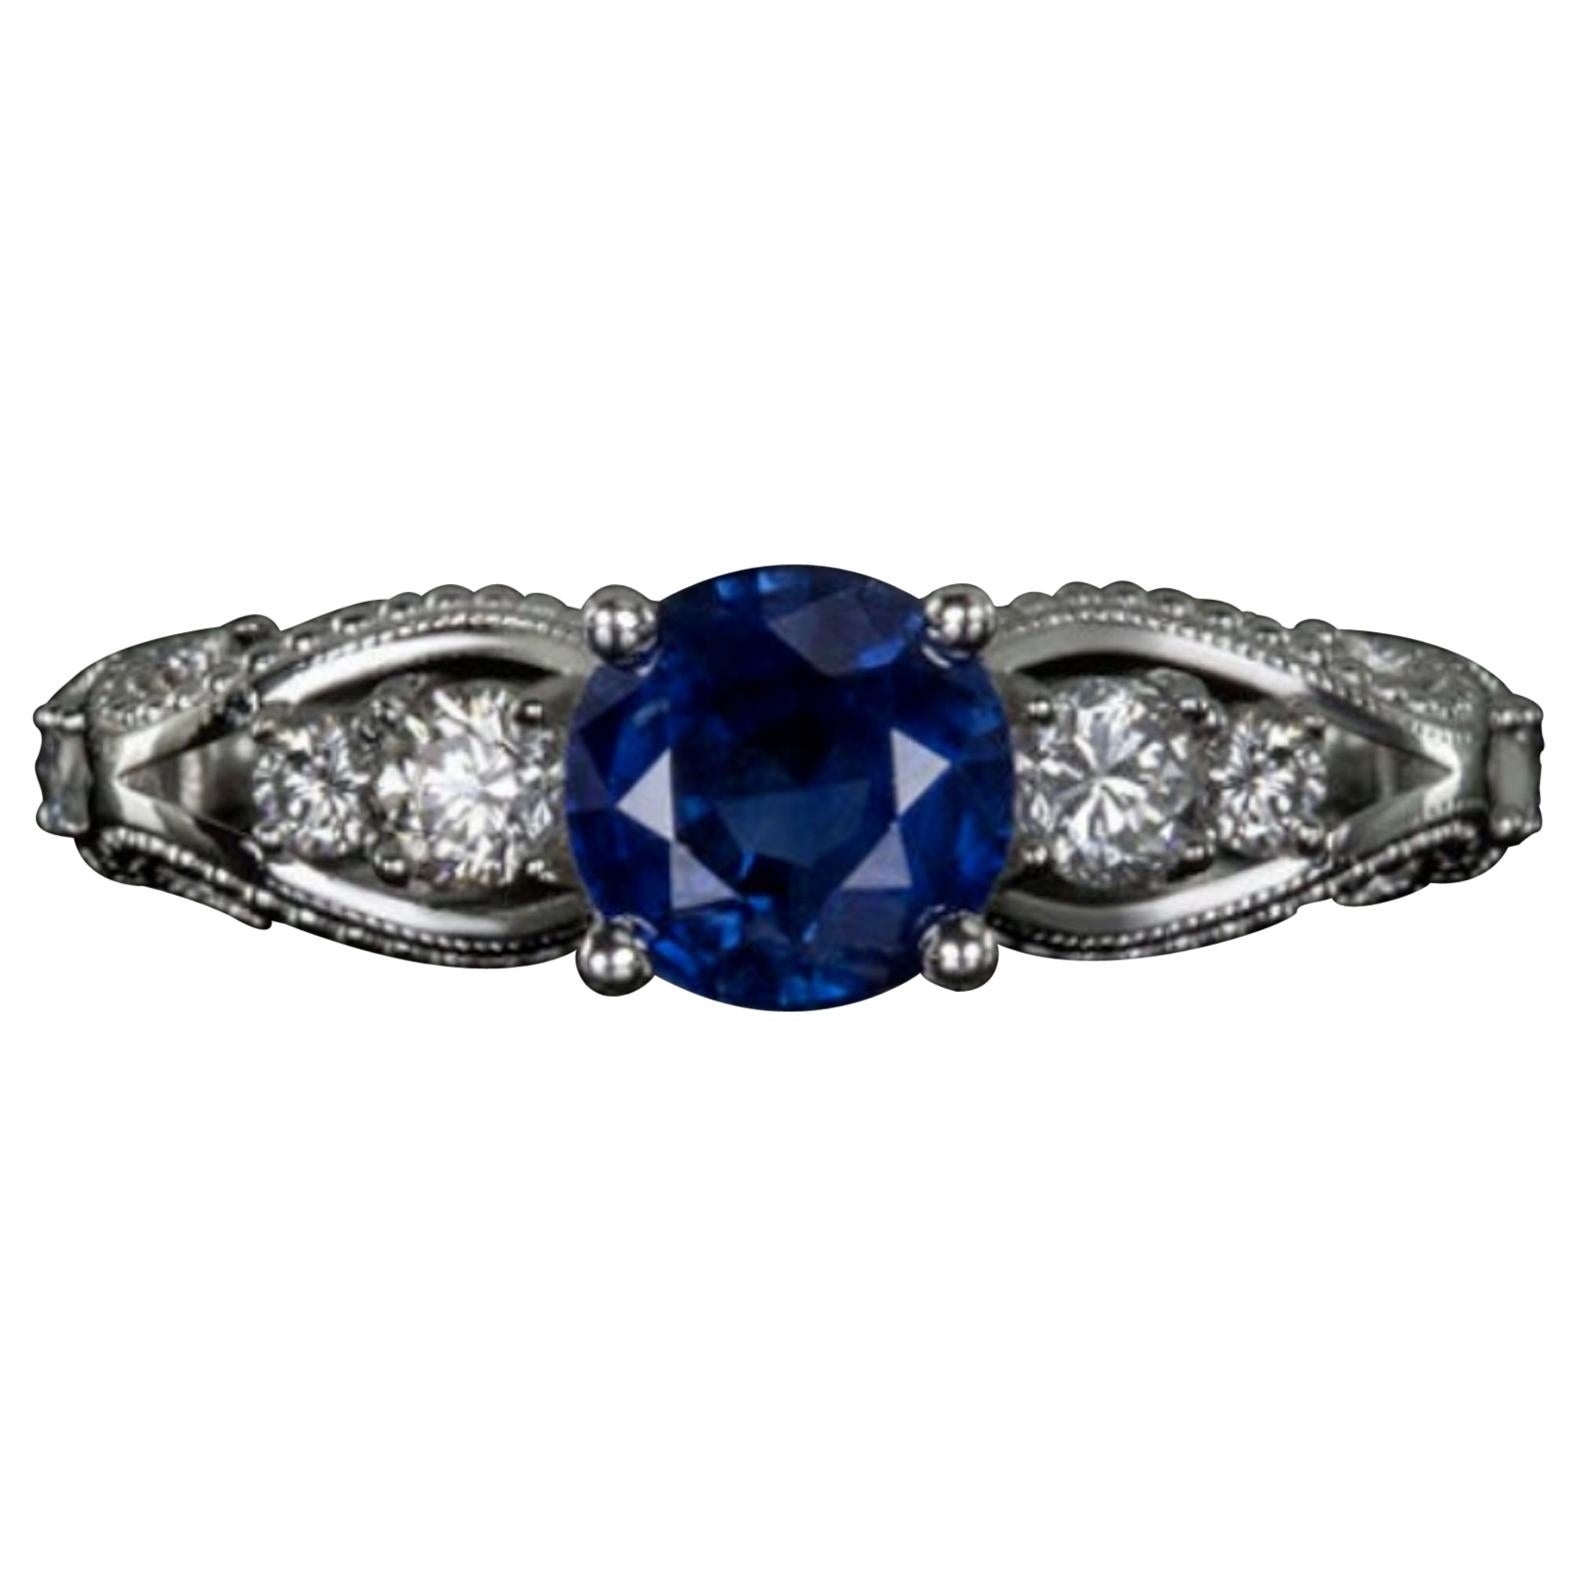 1.41 Carat Natural Kashmir Blue Sapphire Diamond Cocktail White Gold Ring